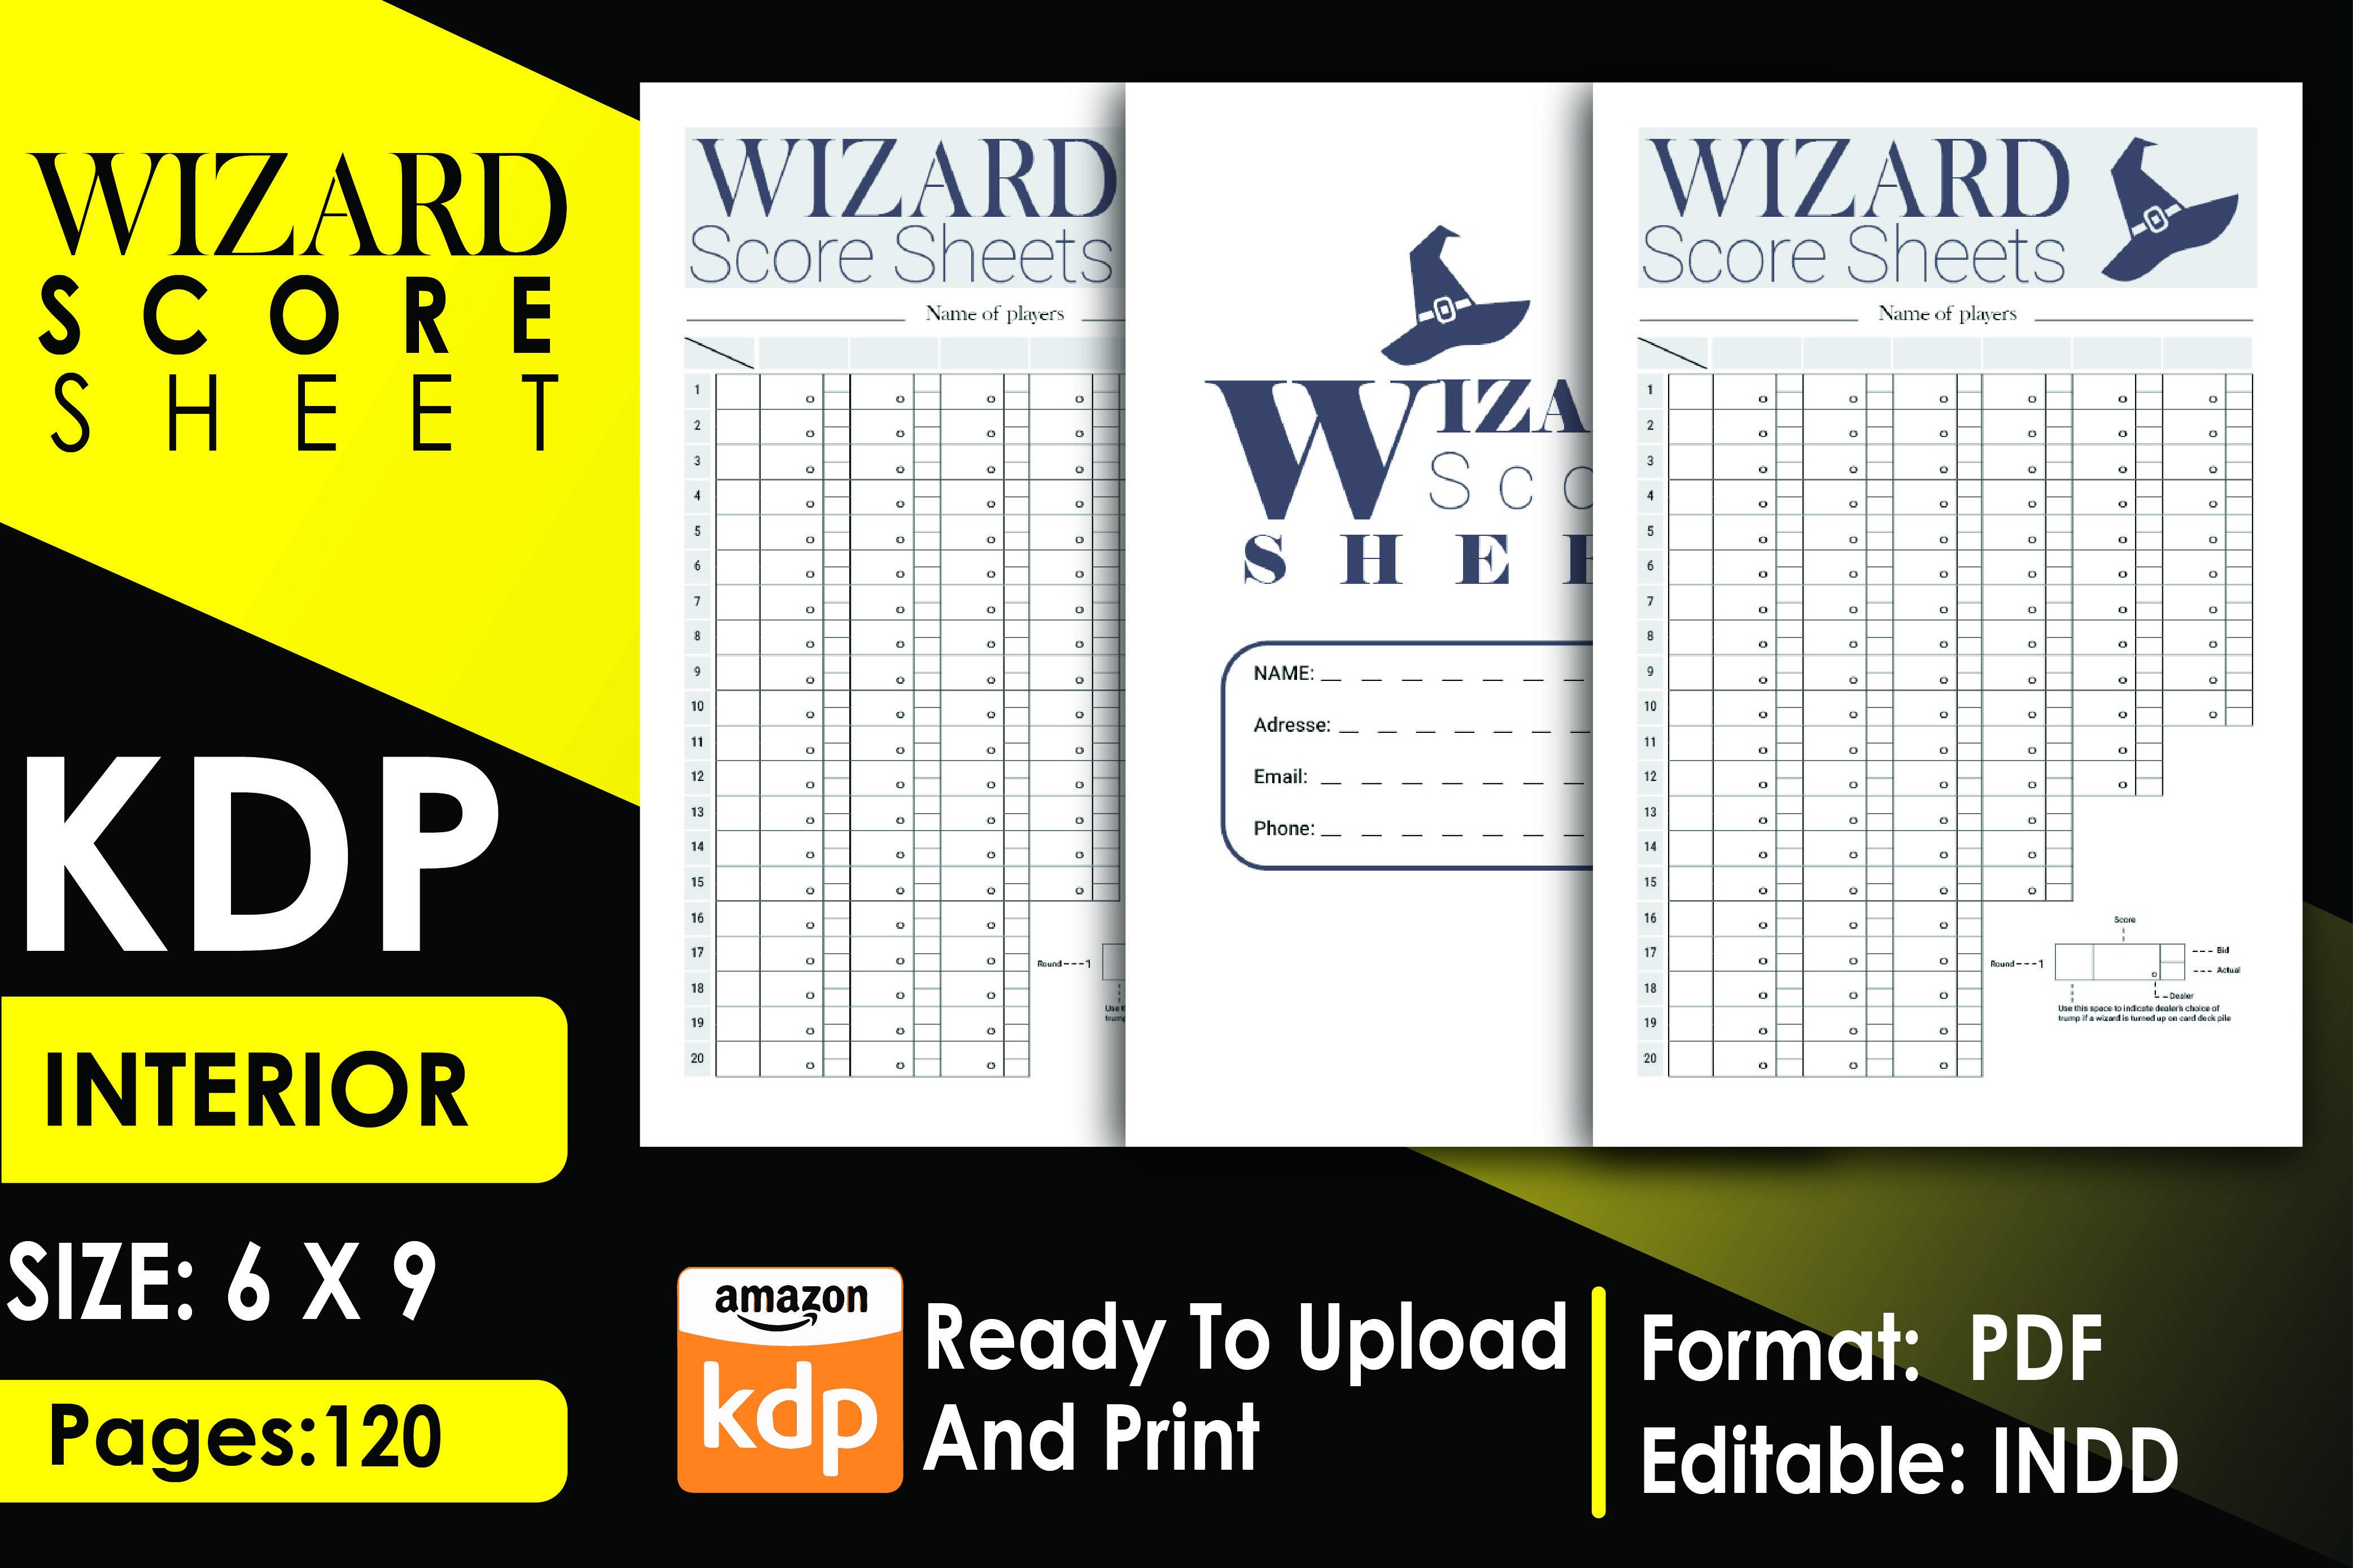 wizard-score-sheets-grafik-von-youcef-rz-creative-fabrica